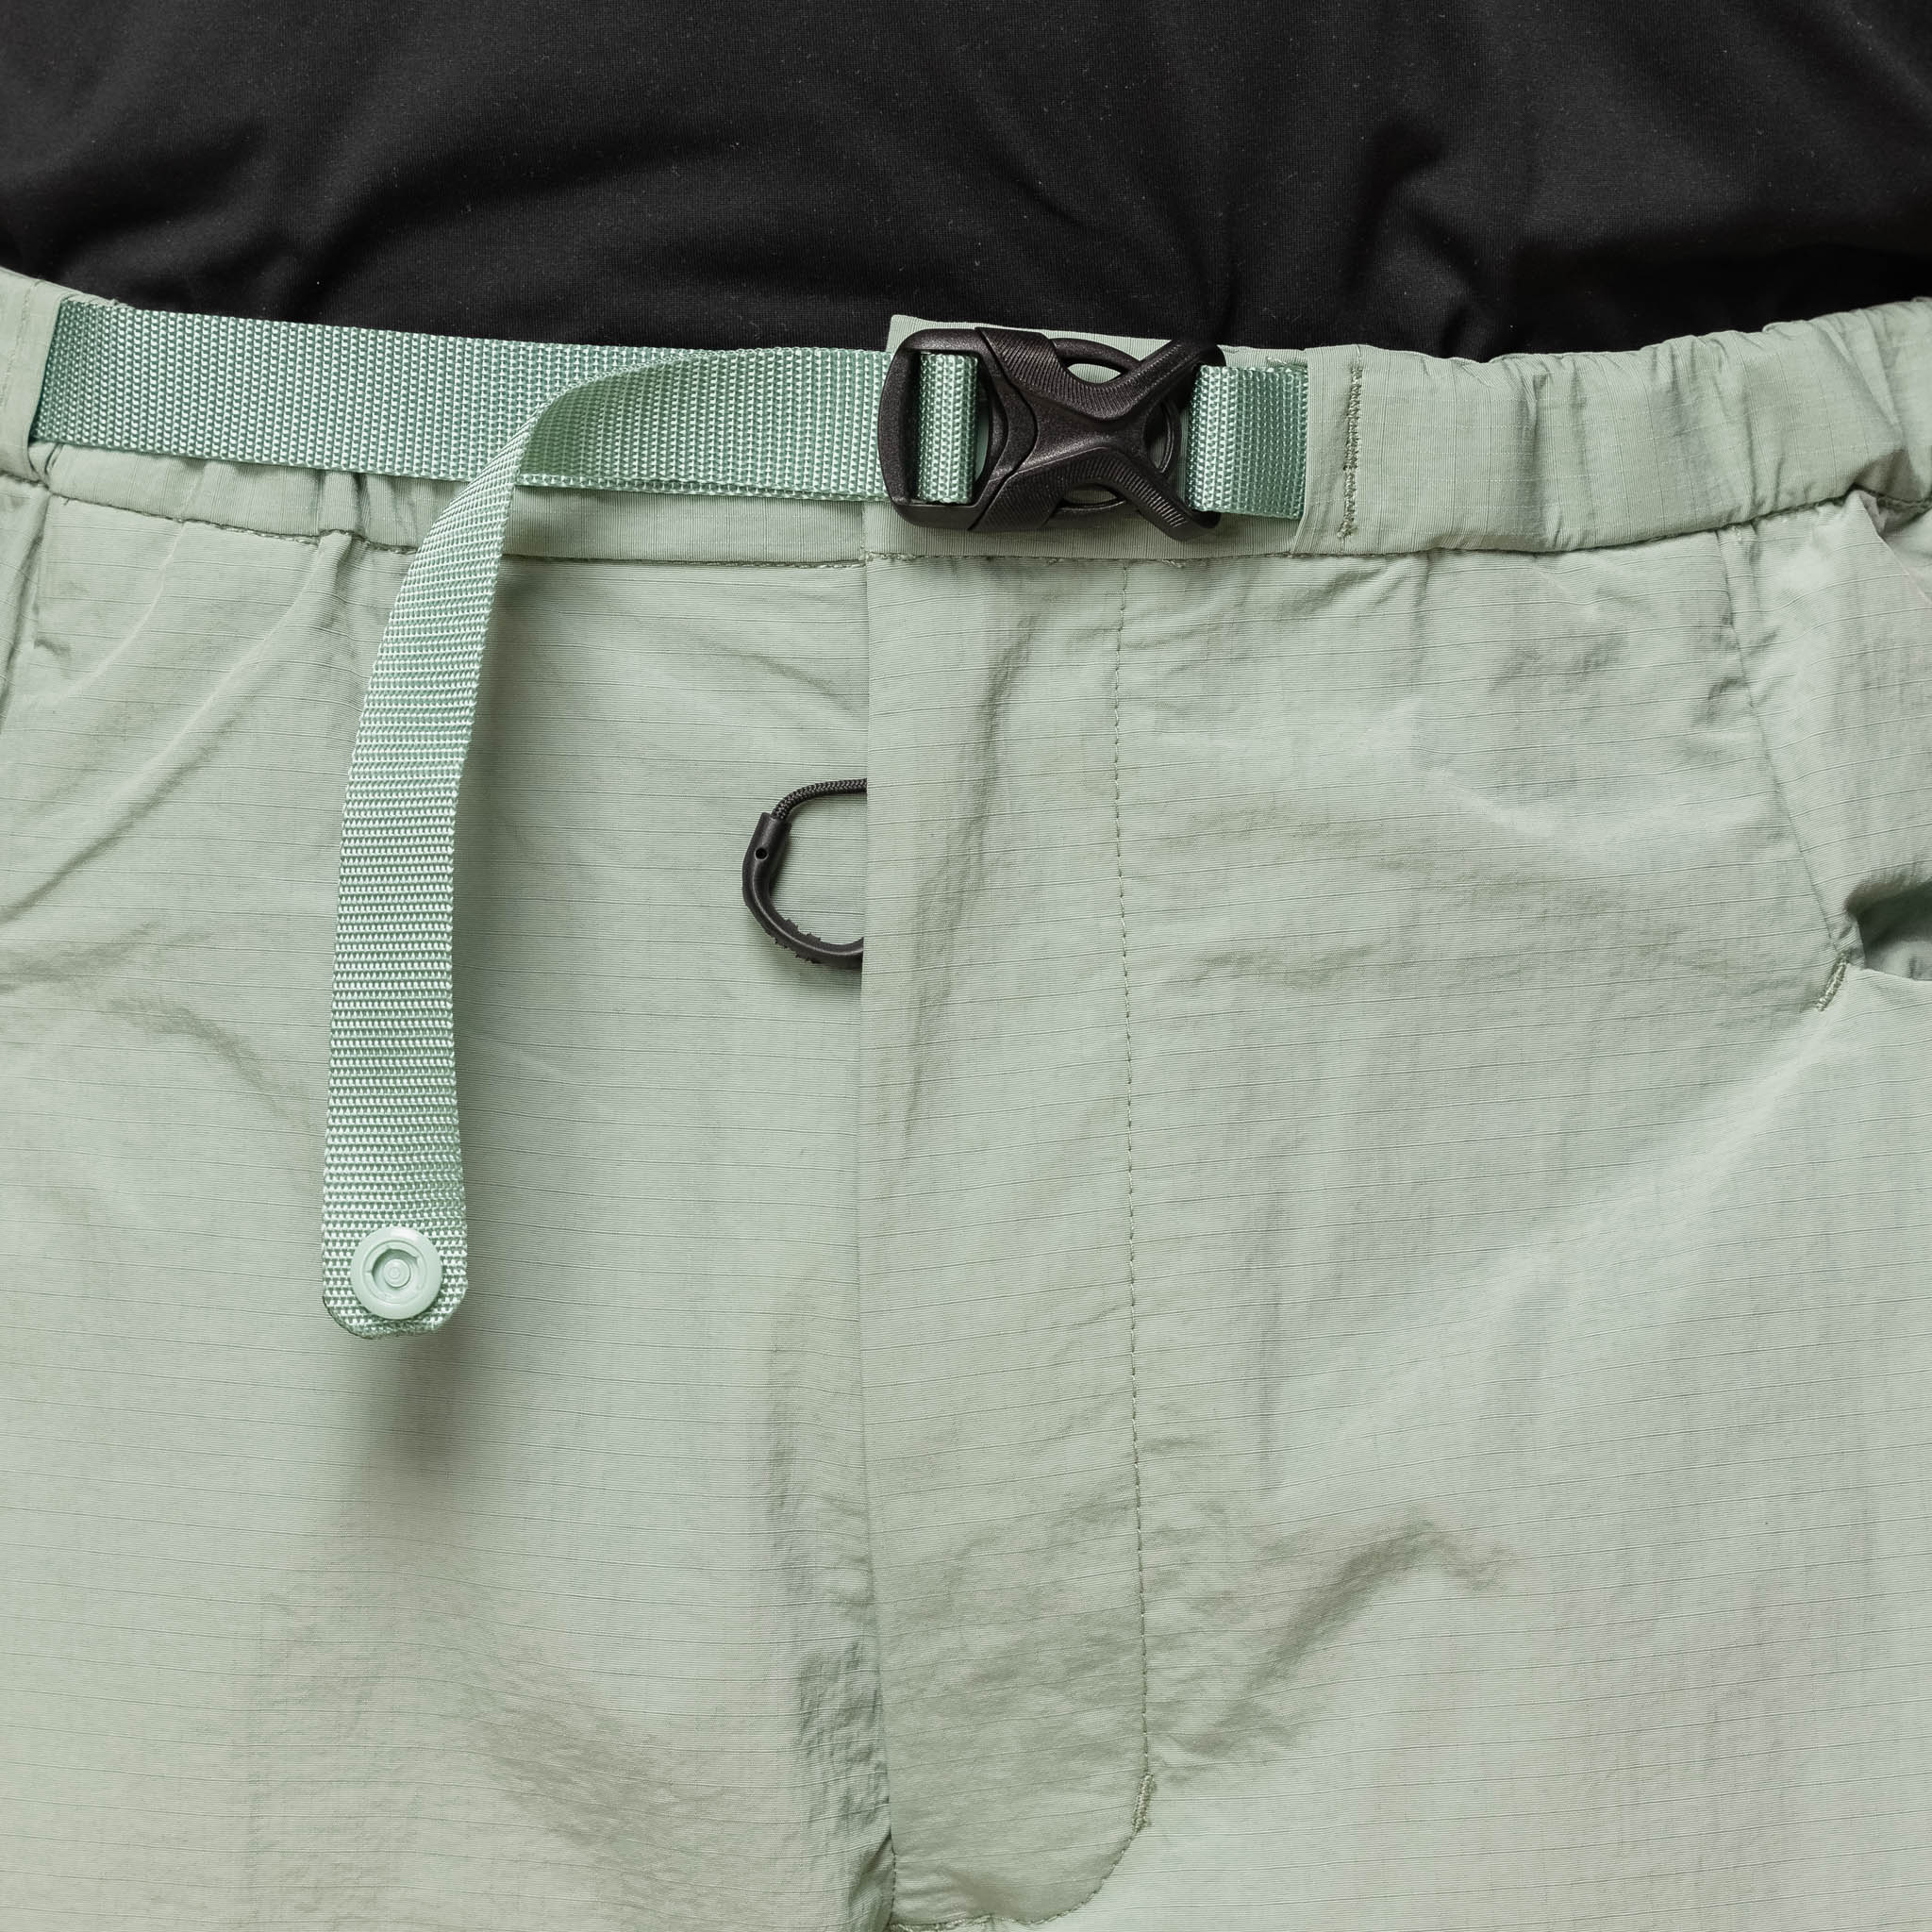 CMF Outdoor Garment - Activity Shorts - Light Khaki